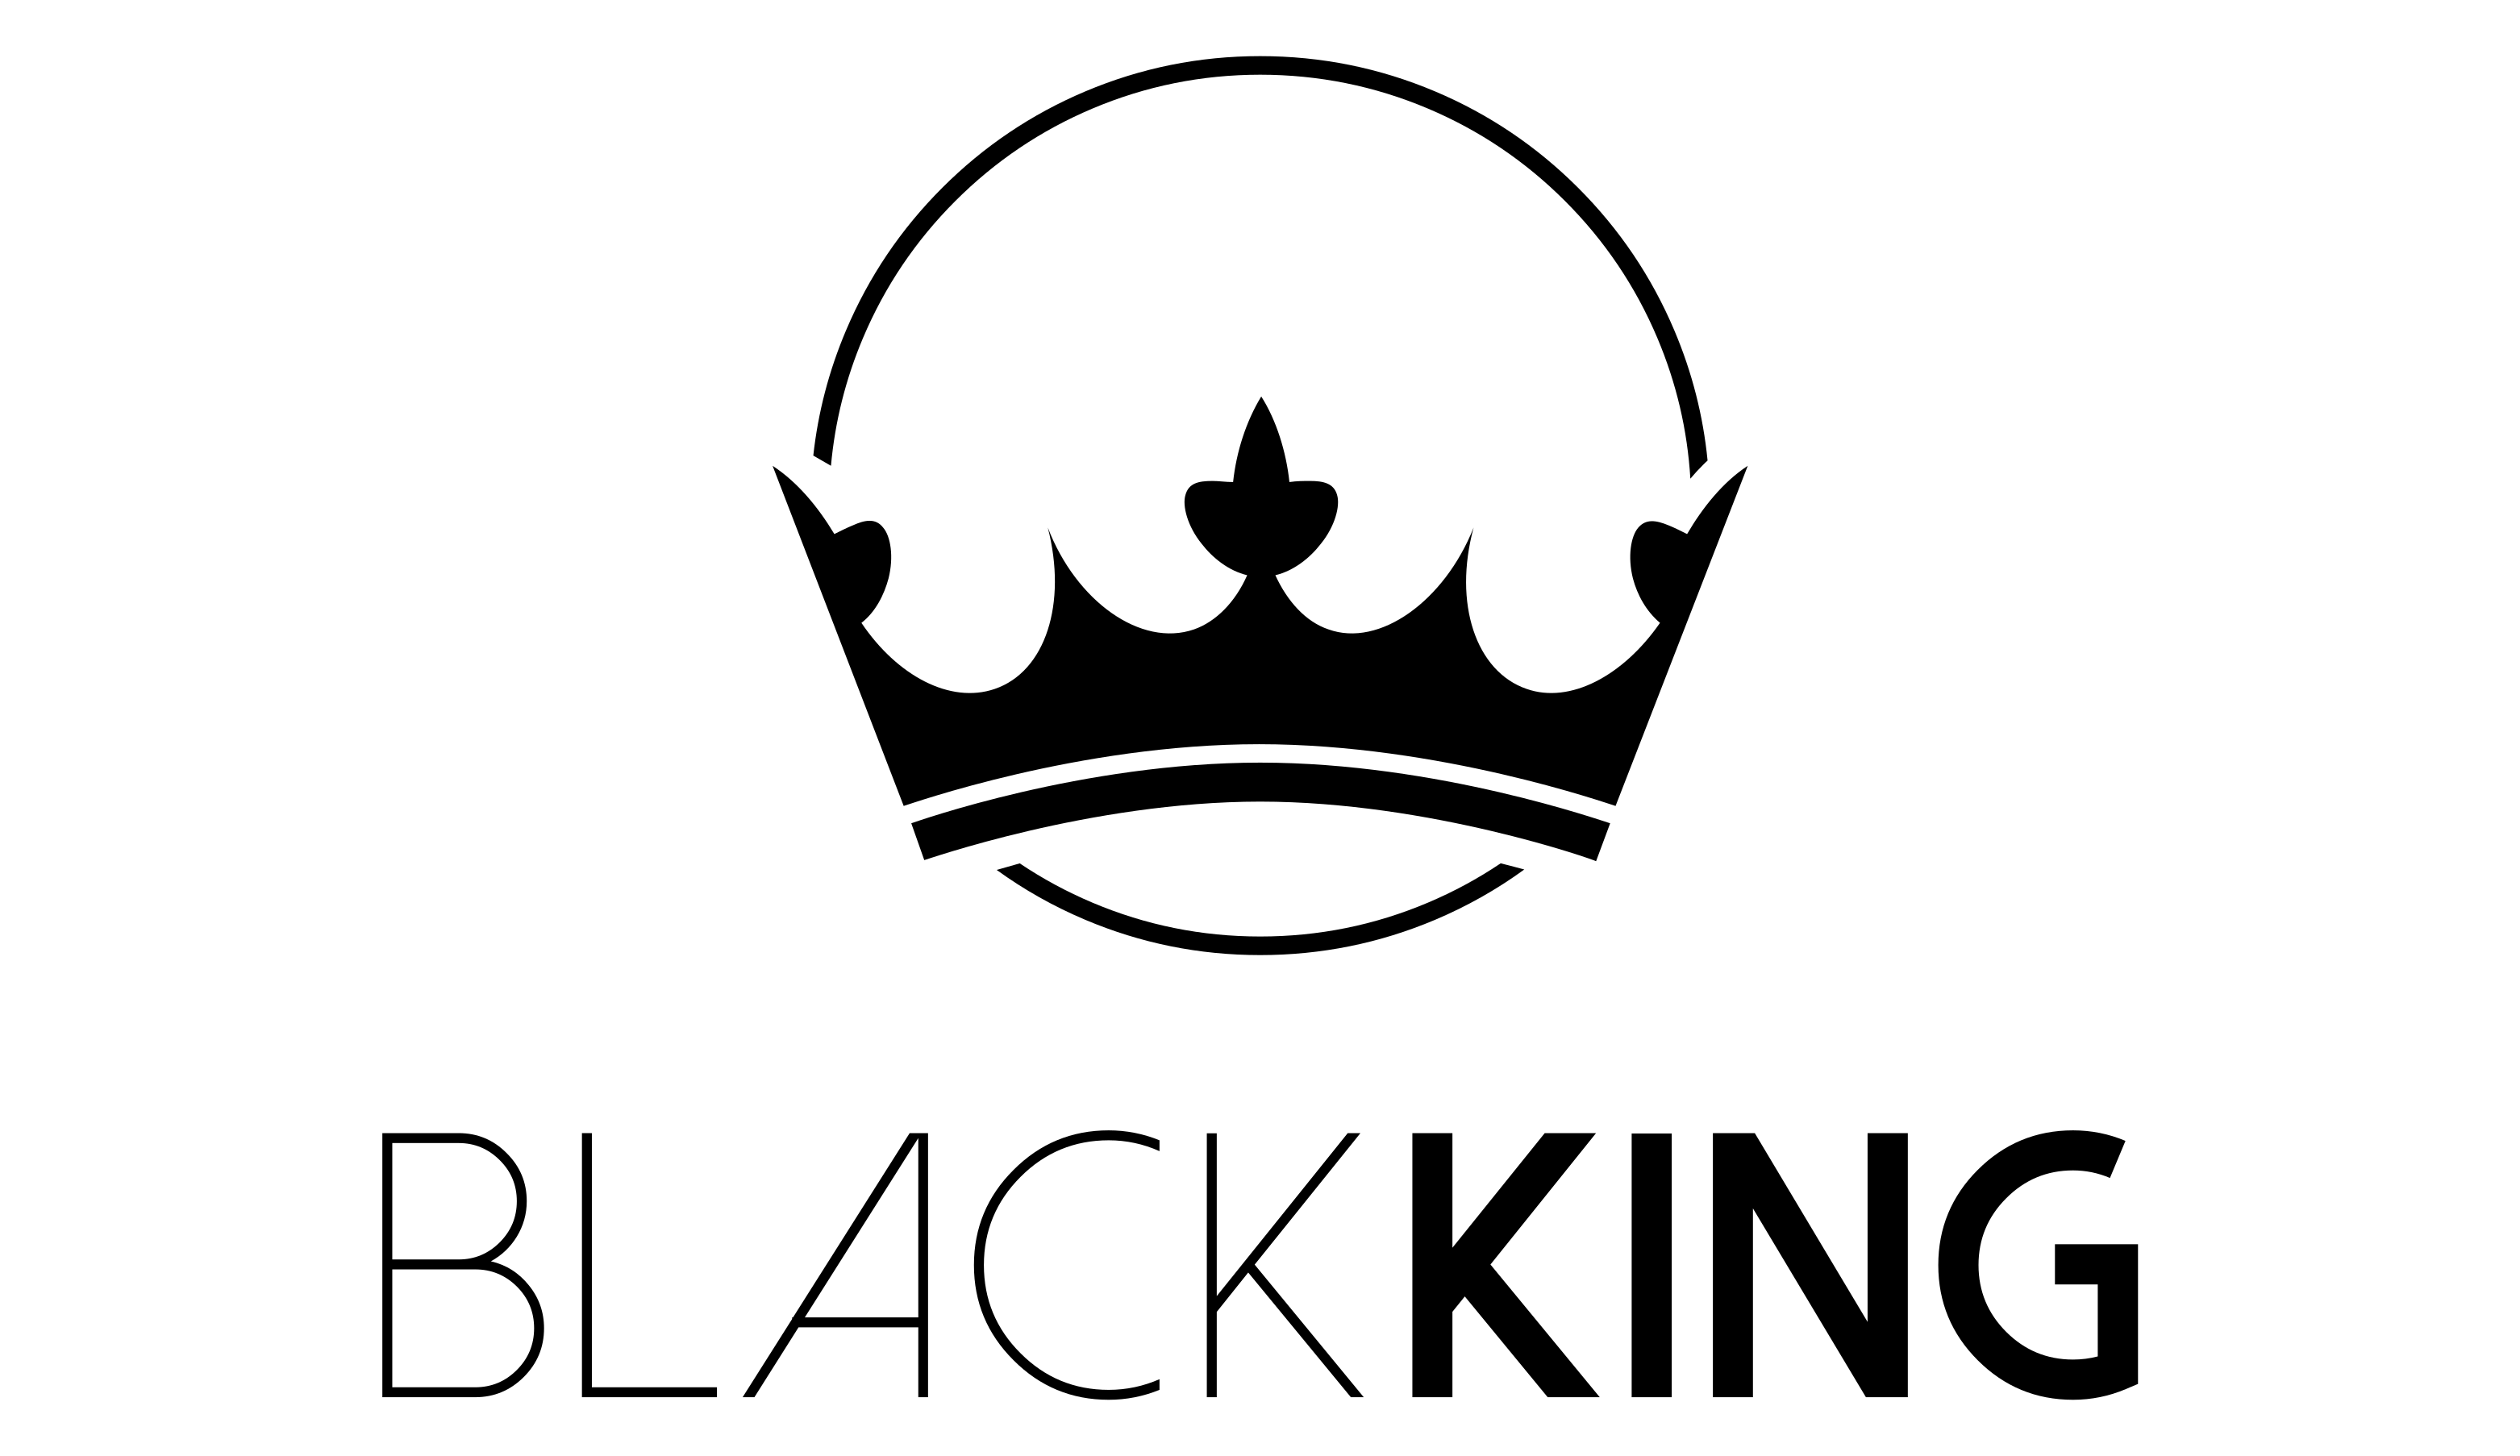 BLACKKING